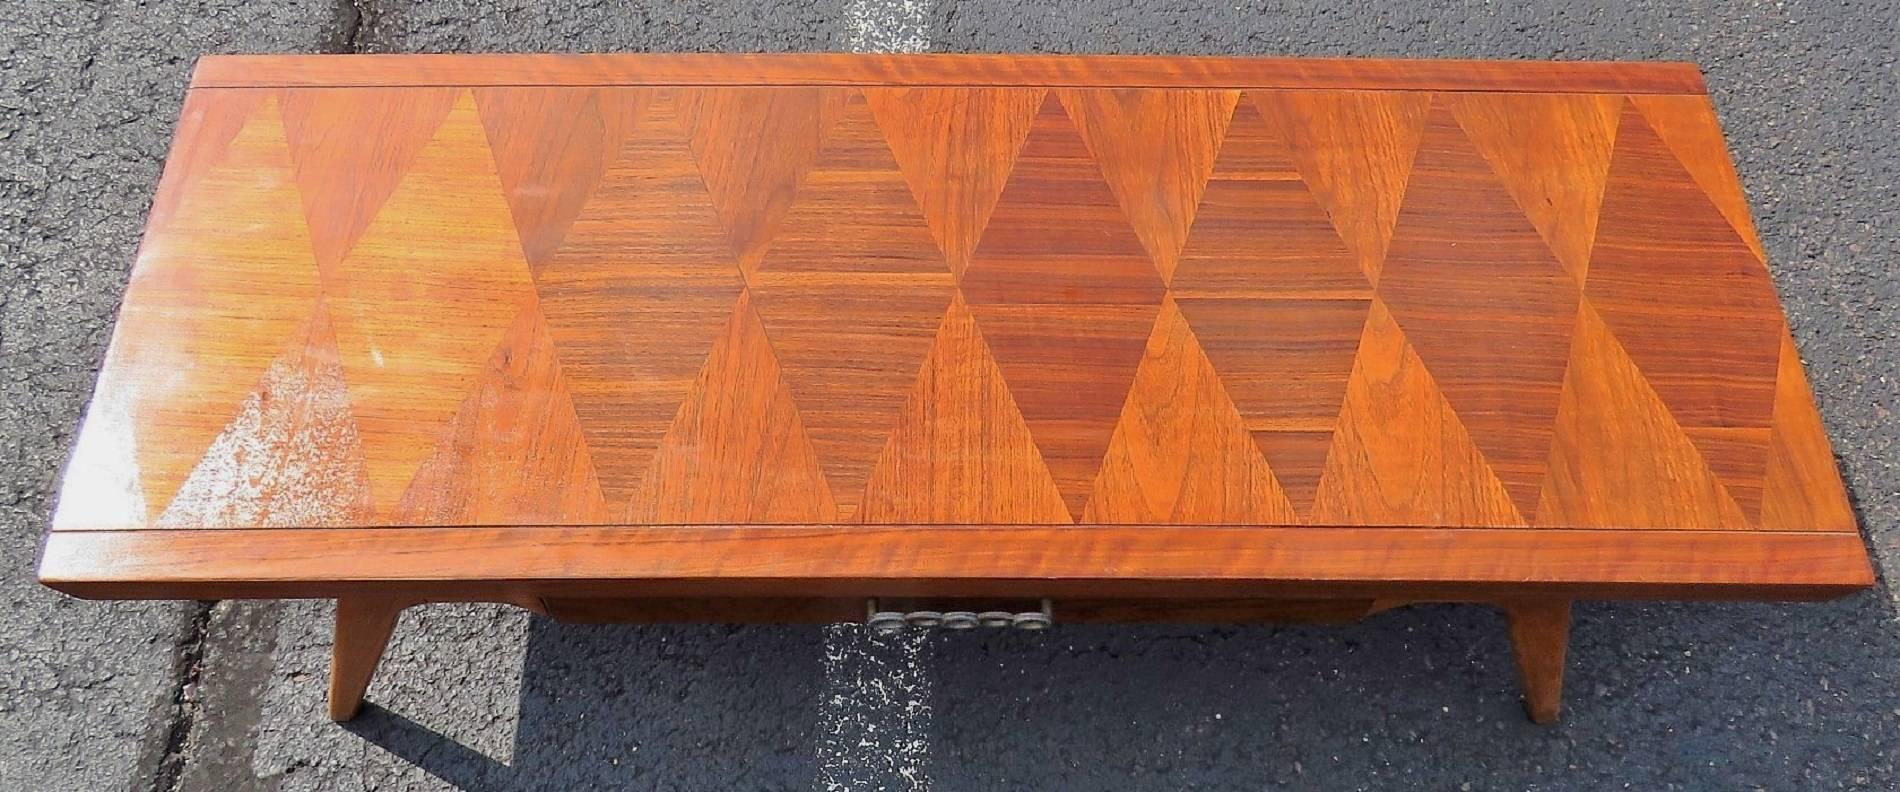 20th Century Lane Modern Design Inlaid Coffee Table